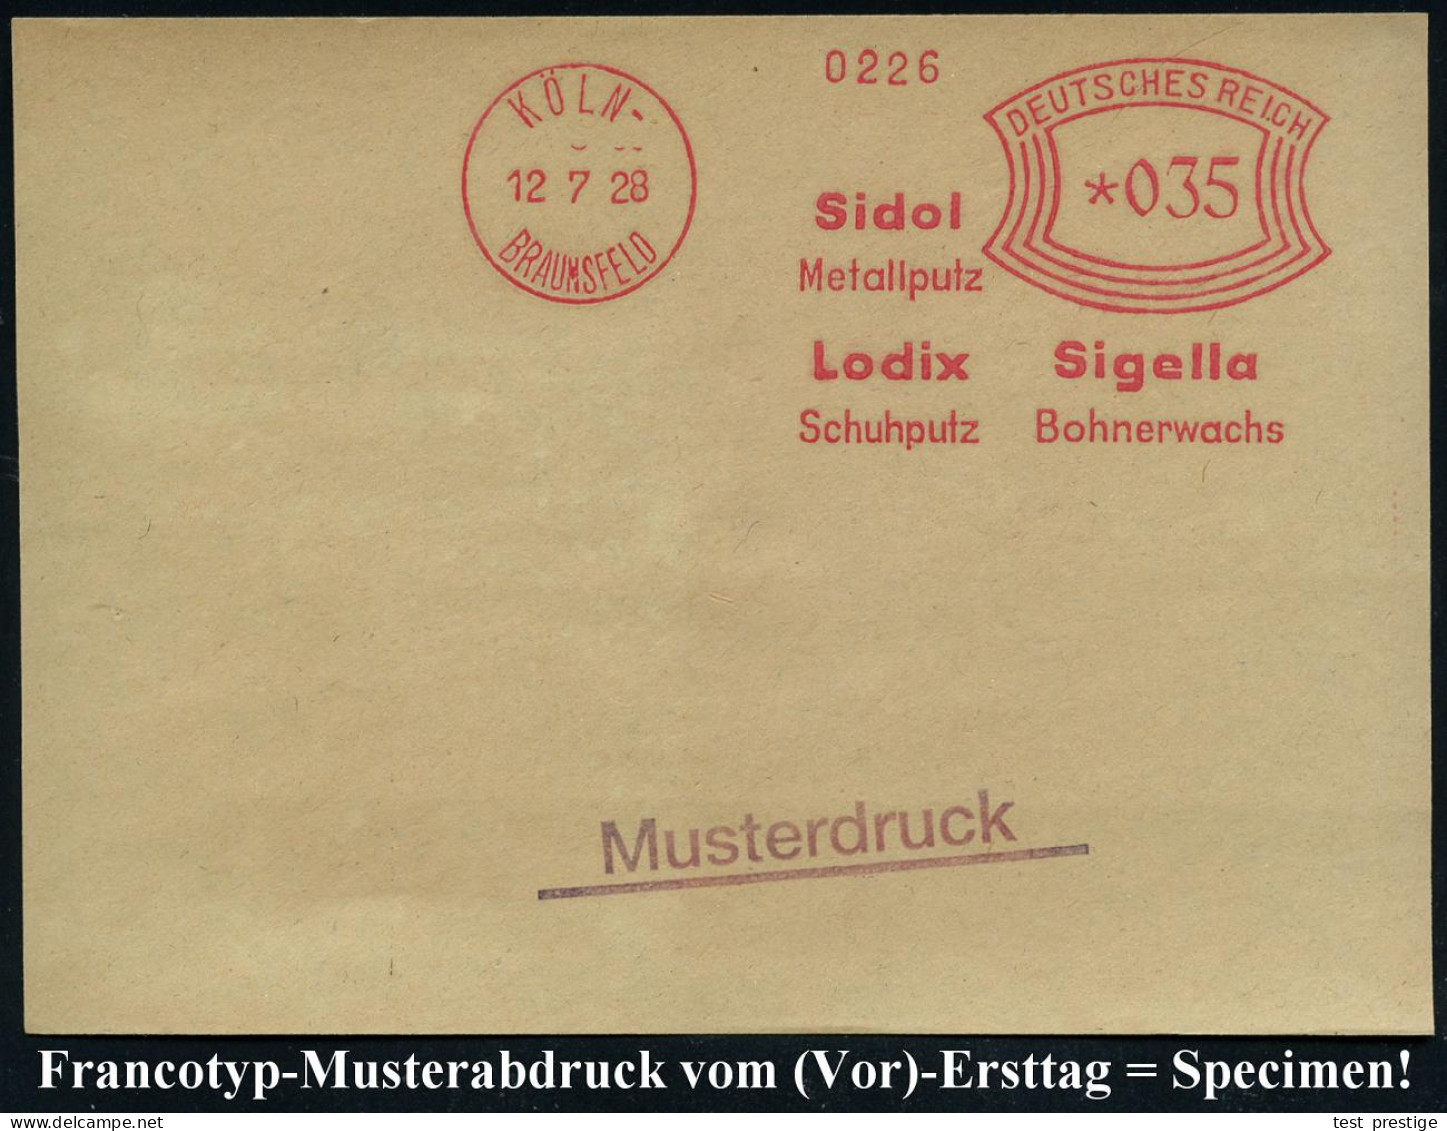 KÖLN-/ BRAUNSFELD/ Sidol/ Metallputz/ Lodix/ Schuhputz/ Sigella/ Bohnerwachs 1928 (12.7.) AFS-Musterabdruck Francotyp "B - Química